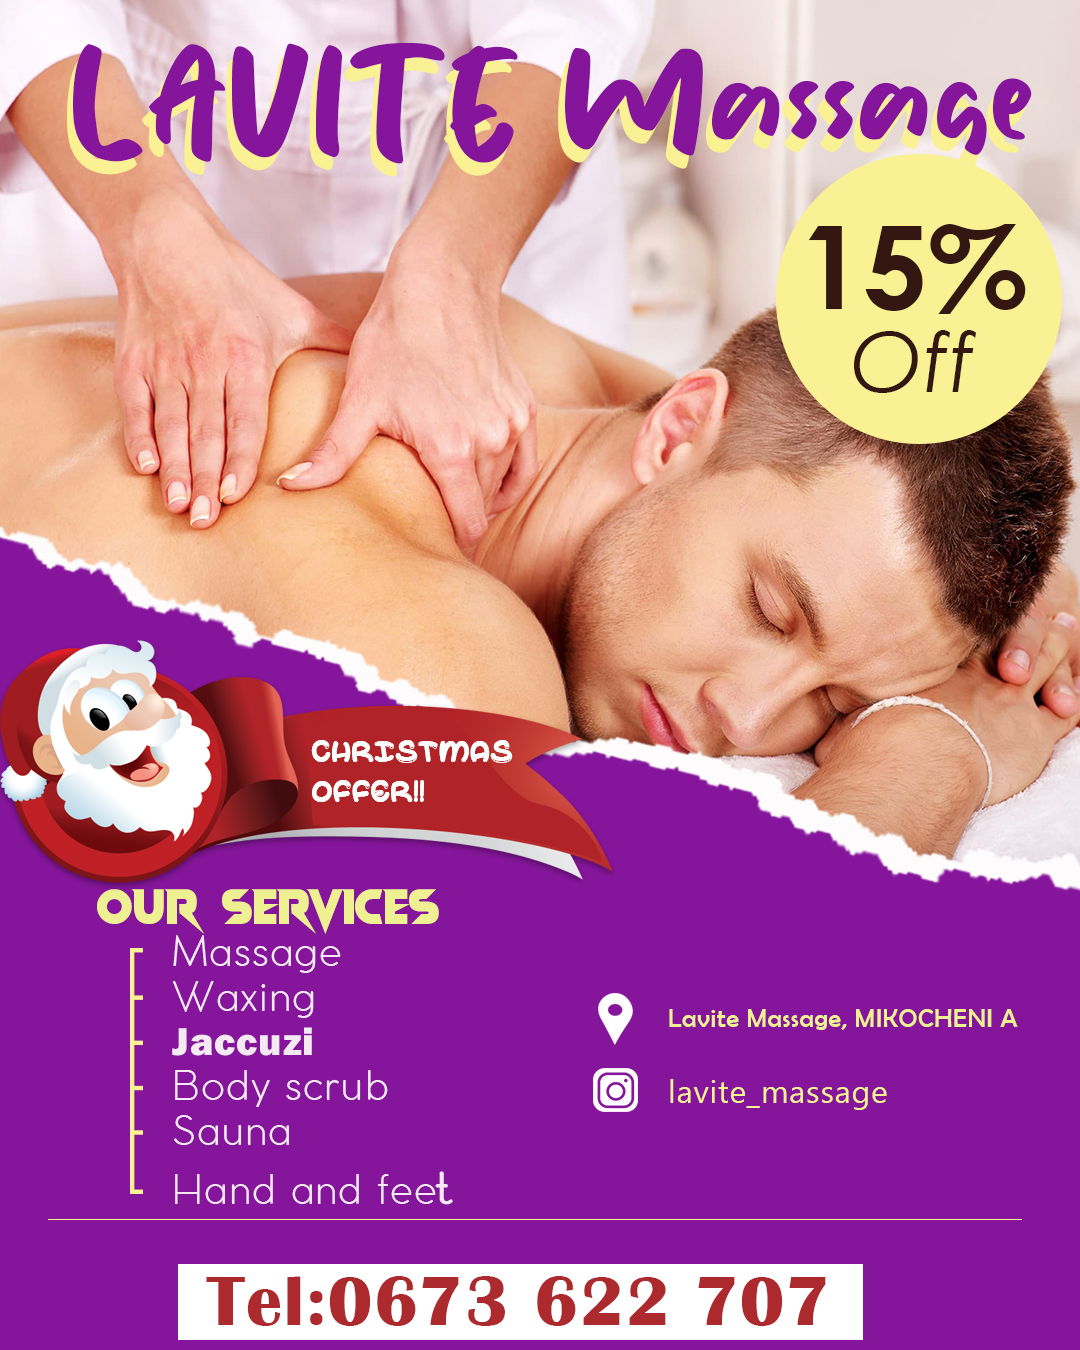 Lavite massage